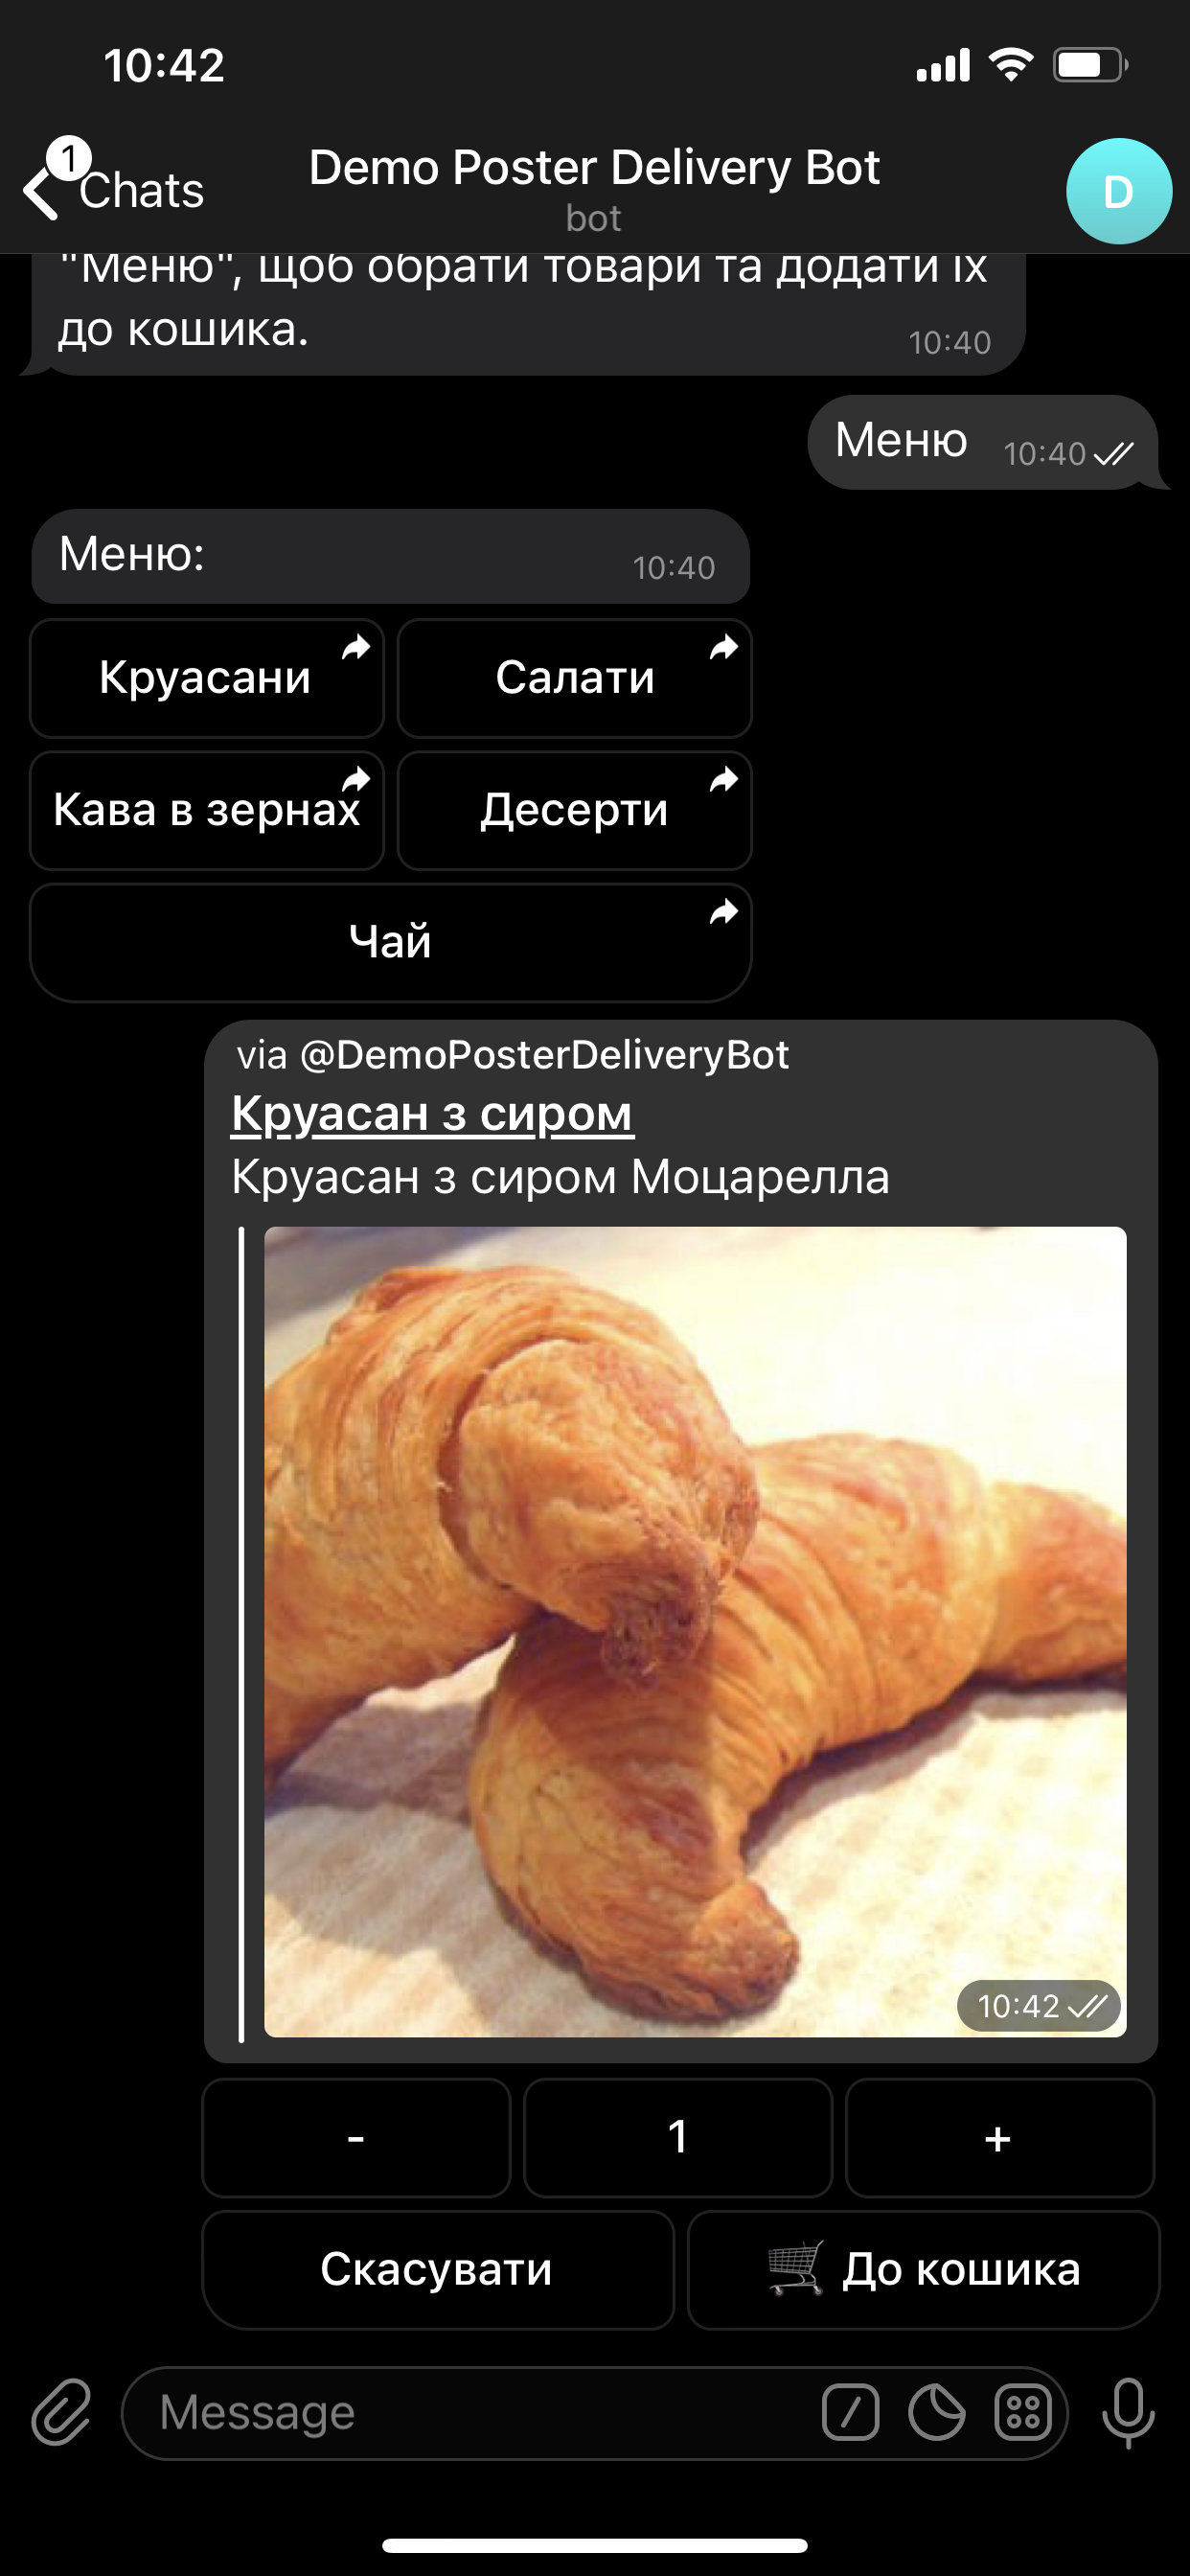 Telegram-бот для замовлень на доставлення